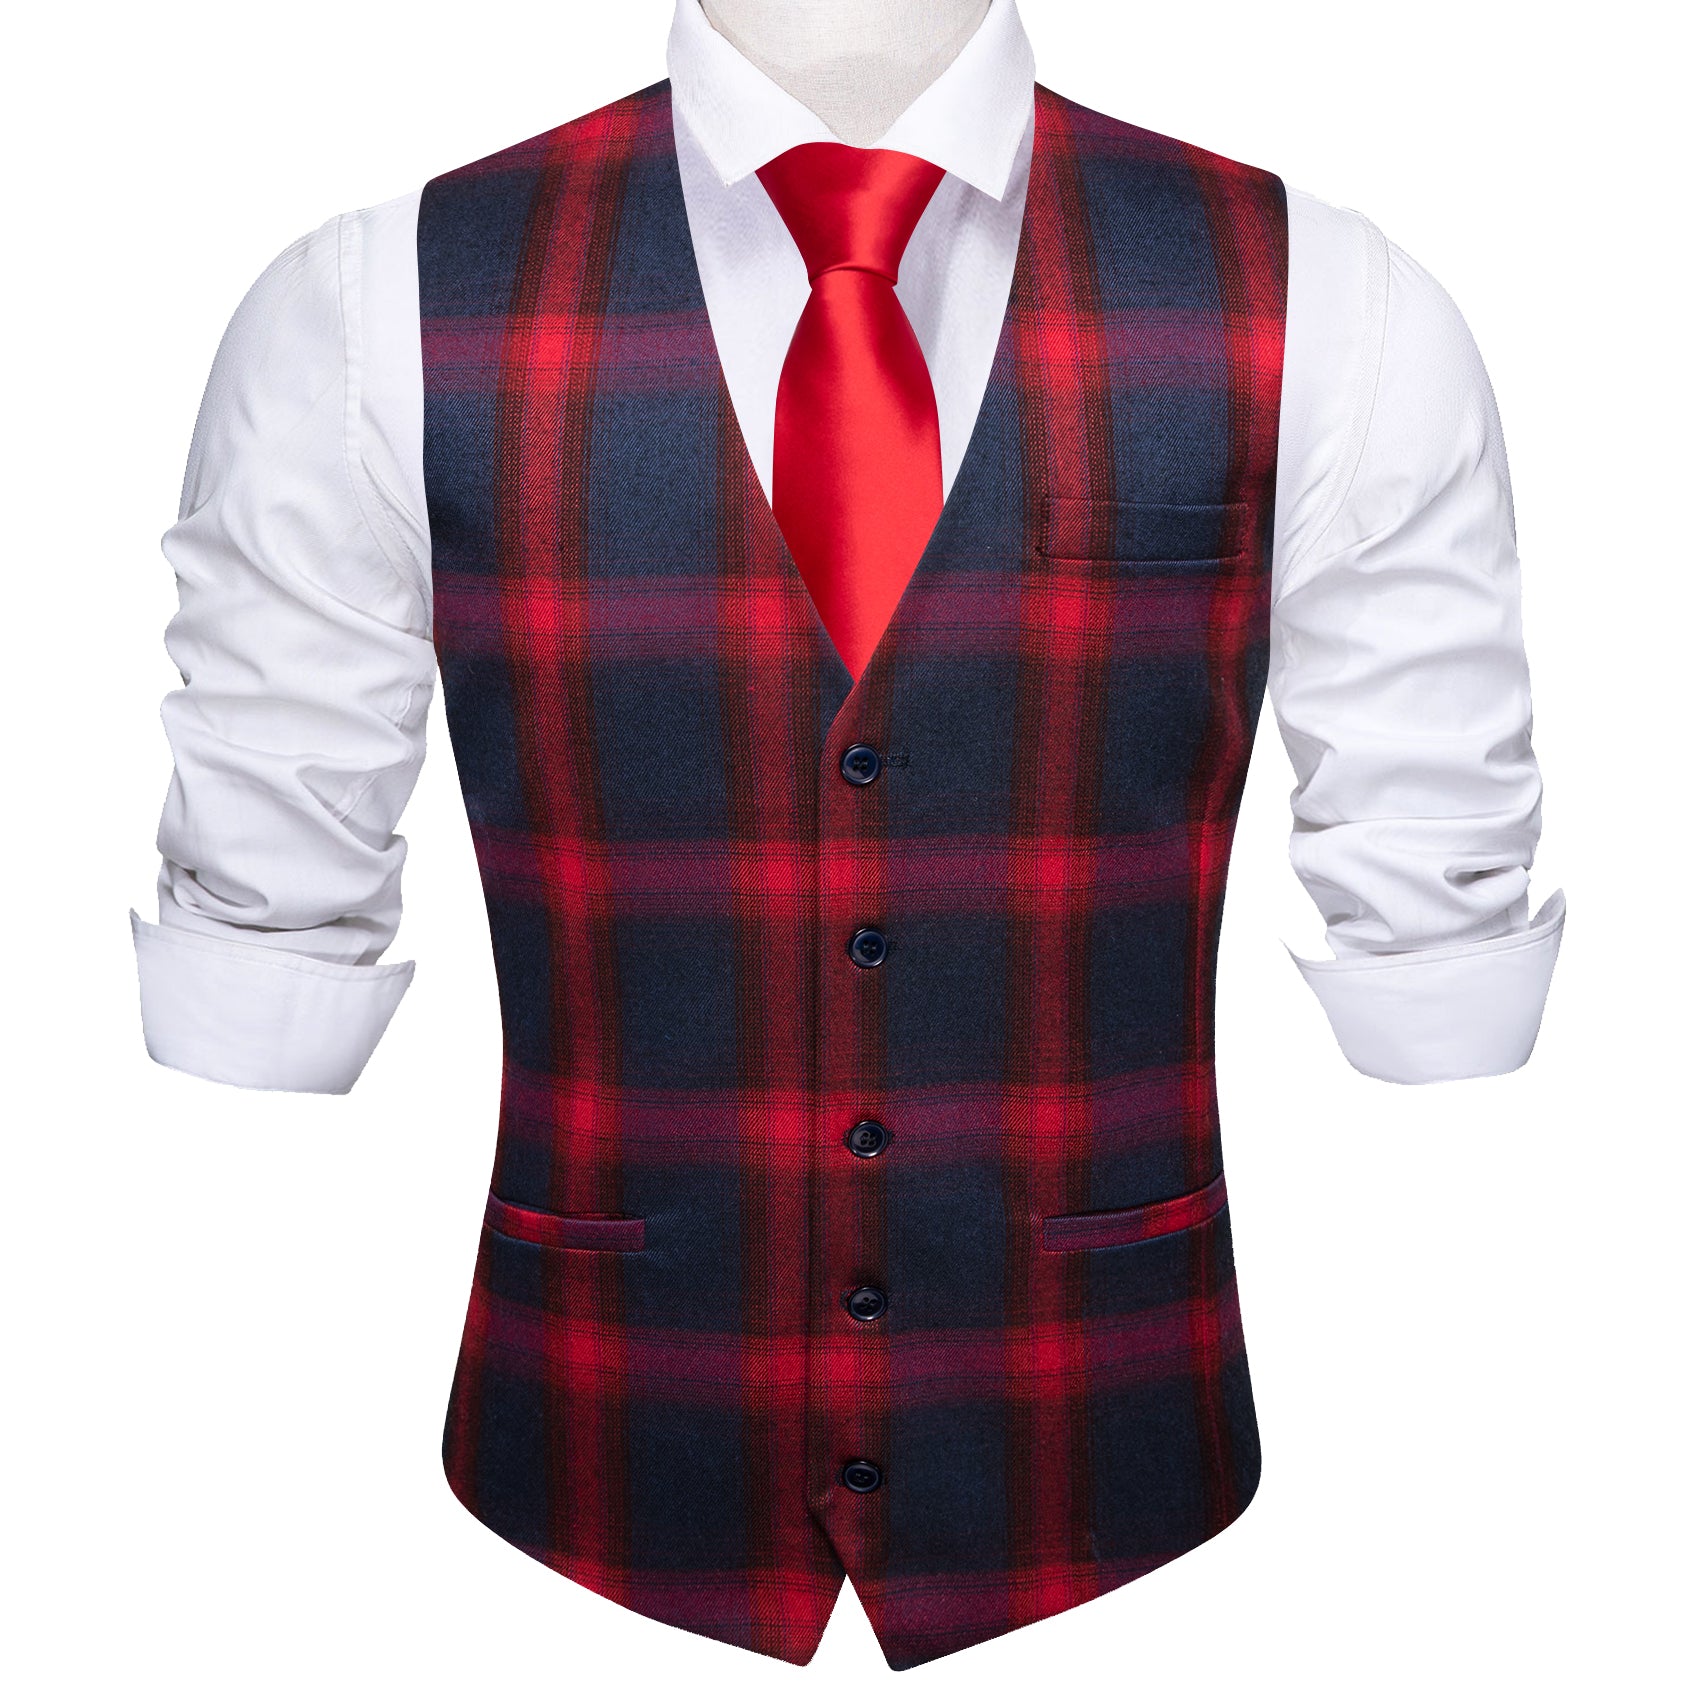 Barry.wang Classy Red Black Plaid Vest Waistcoat Set